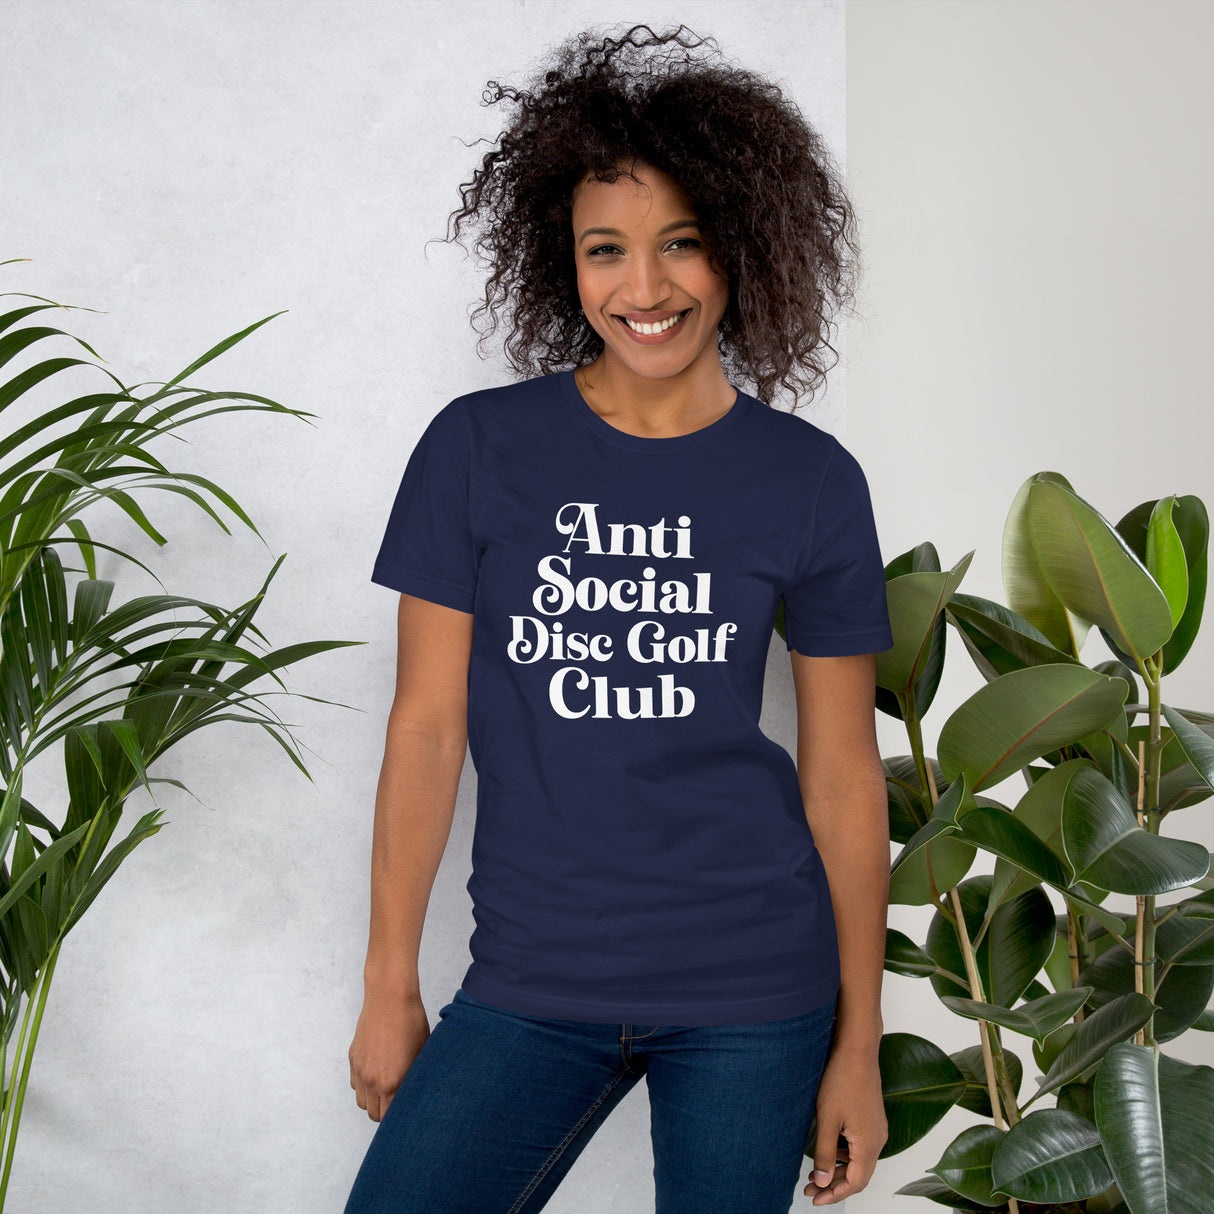 Anti Social Disc Golf Club Women's Shirt